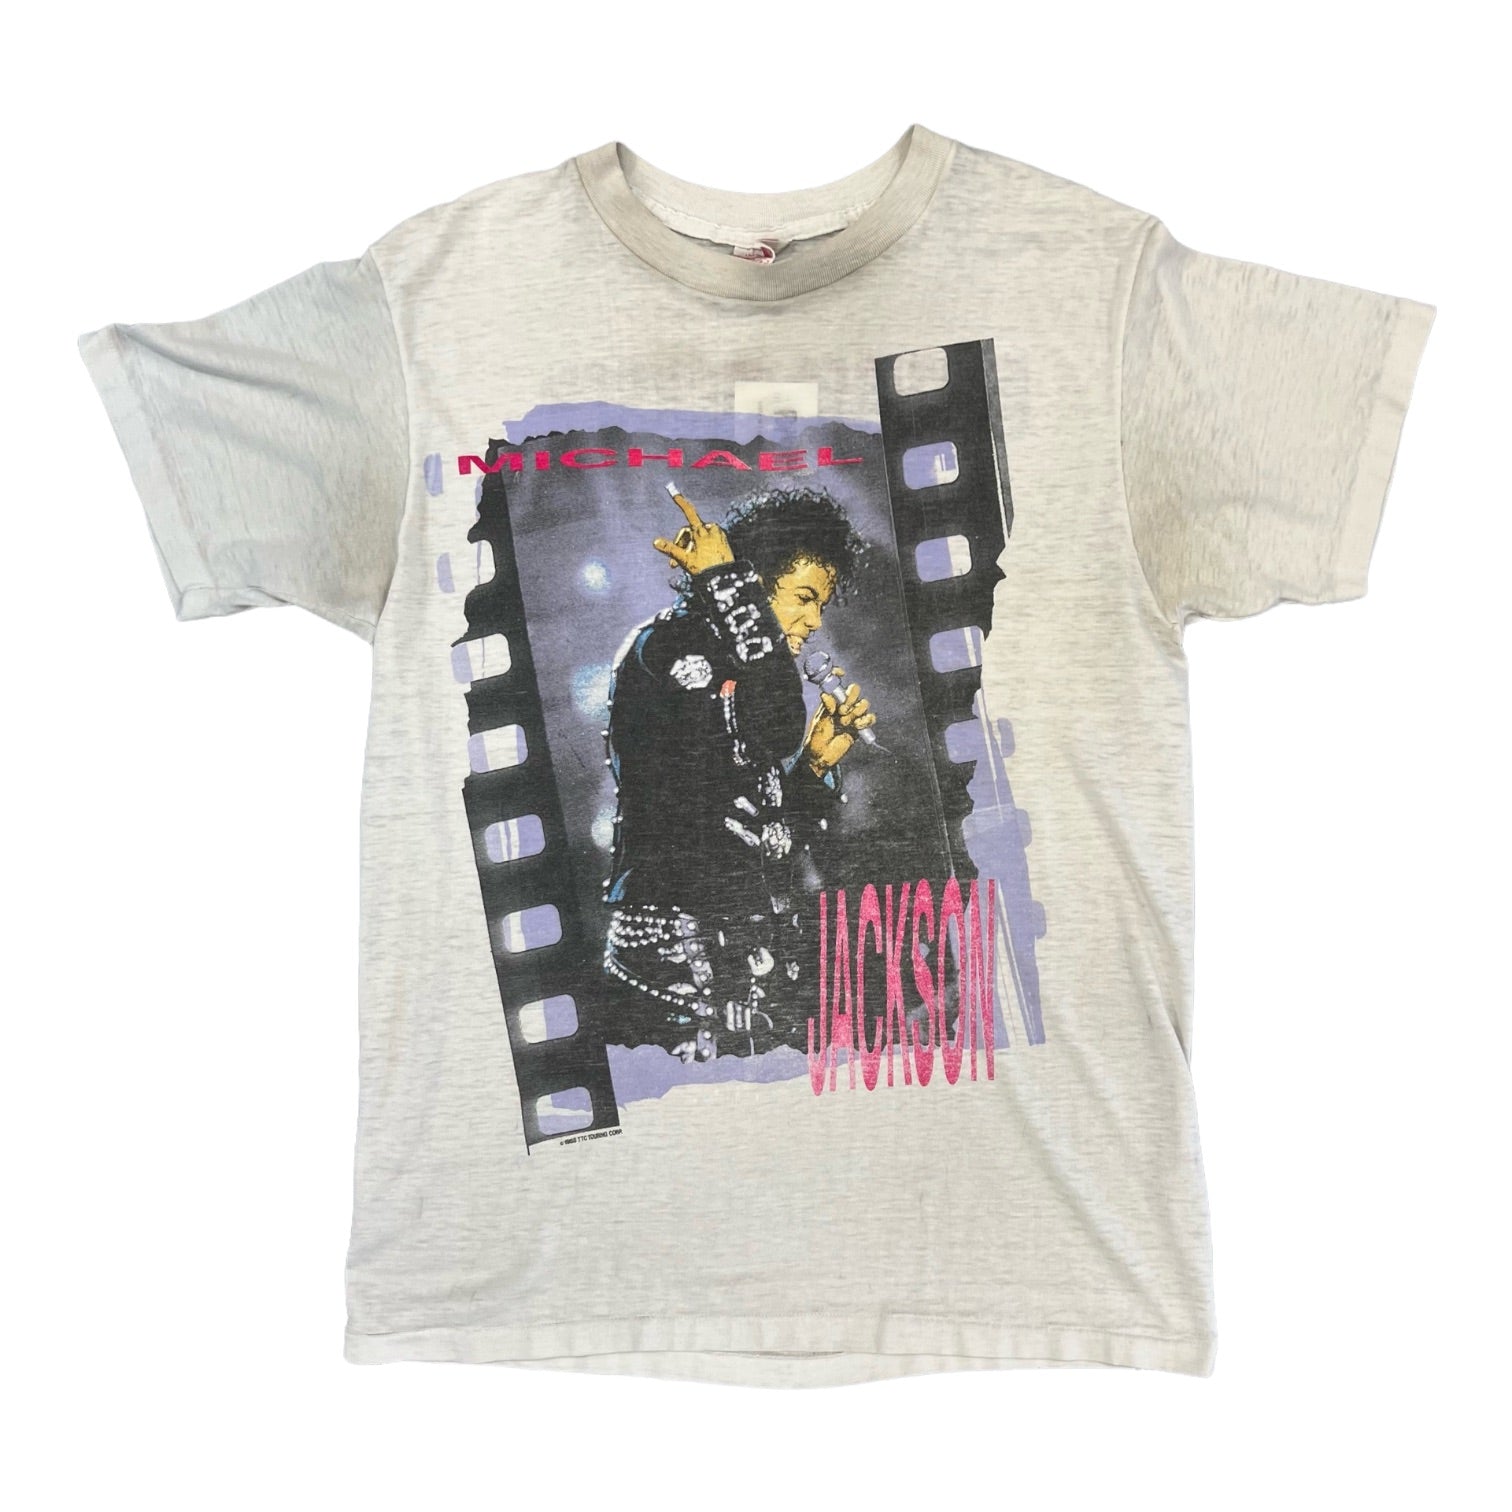 Michael Jackson Vintage Concert Poster Long Sleeve T-Shirt Tee